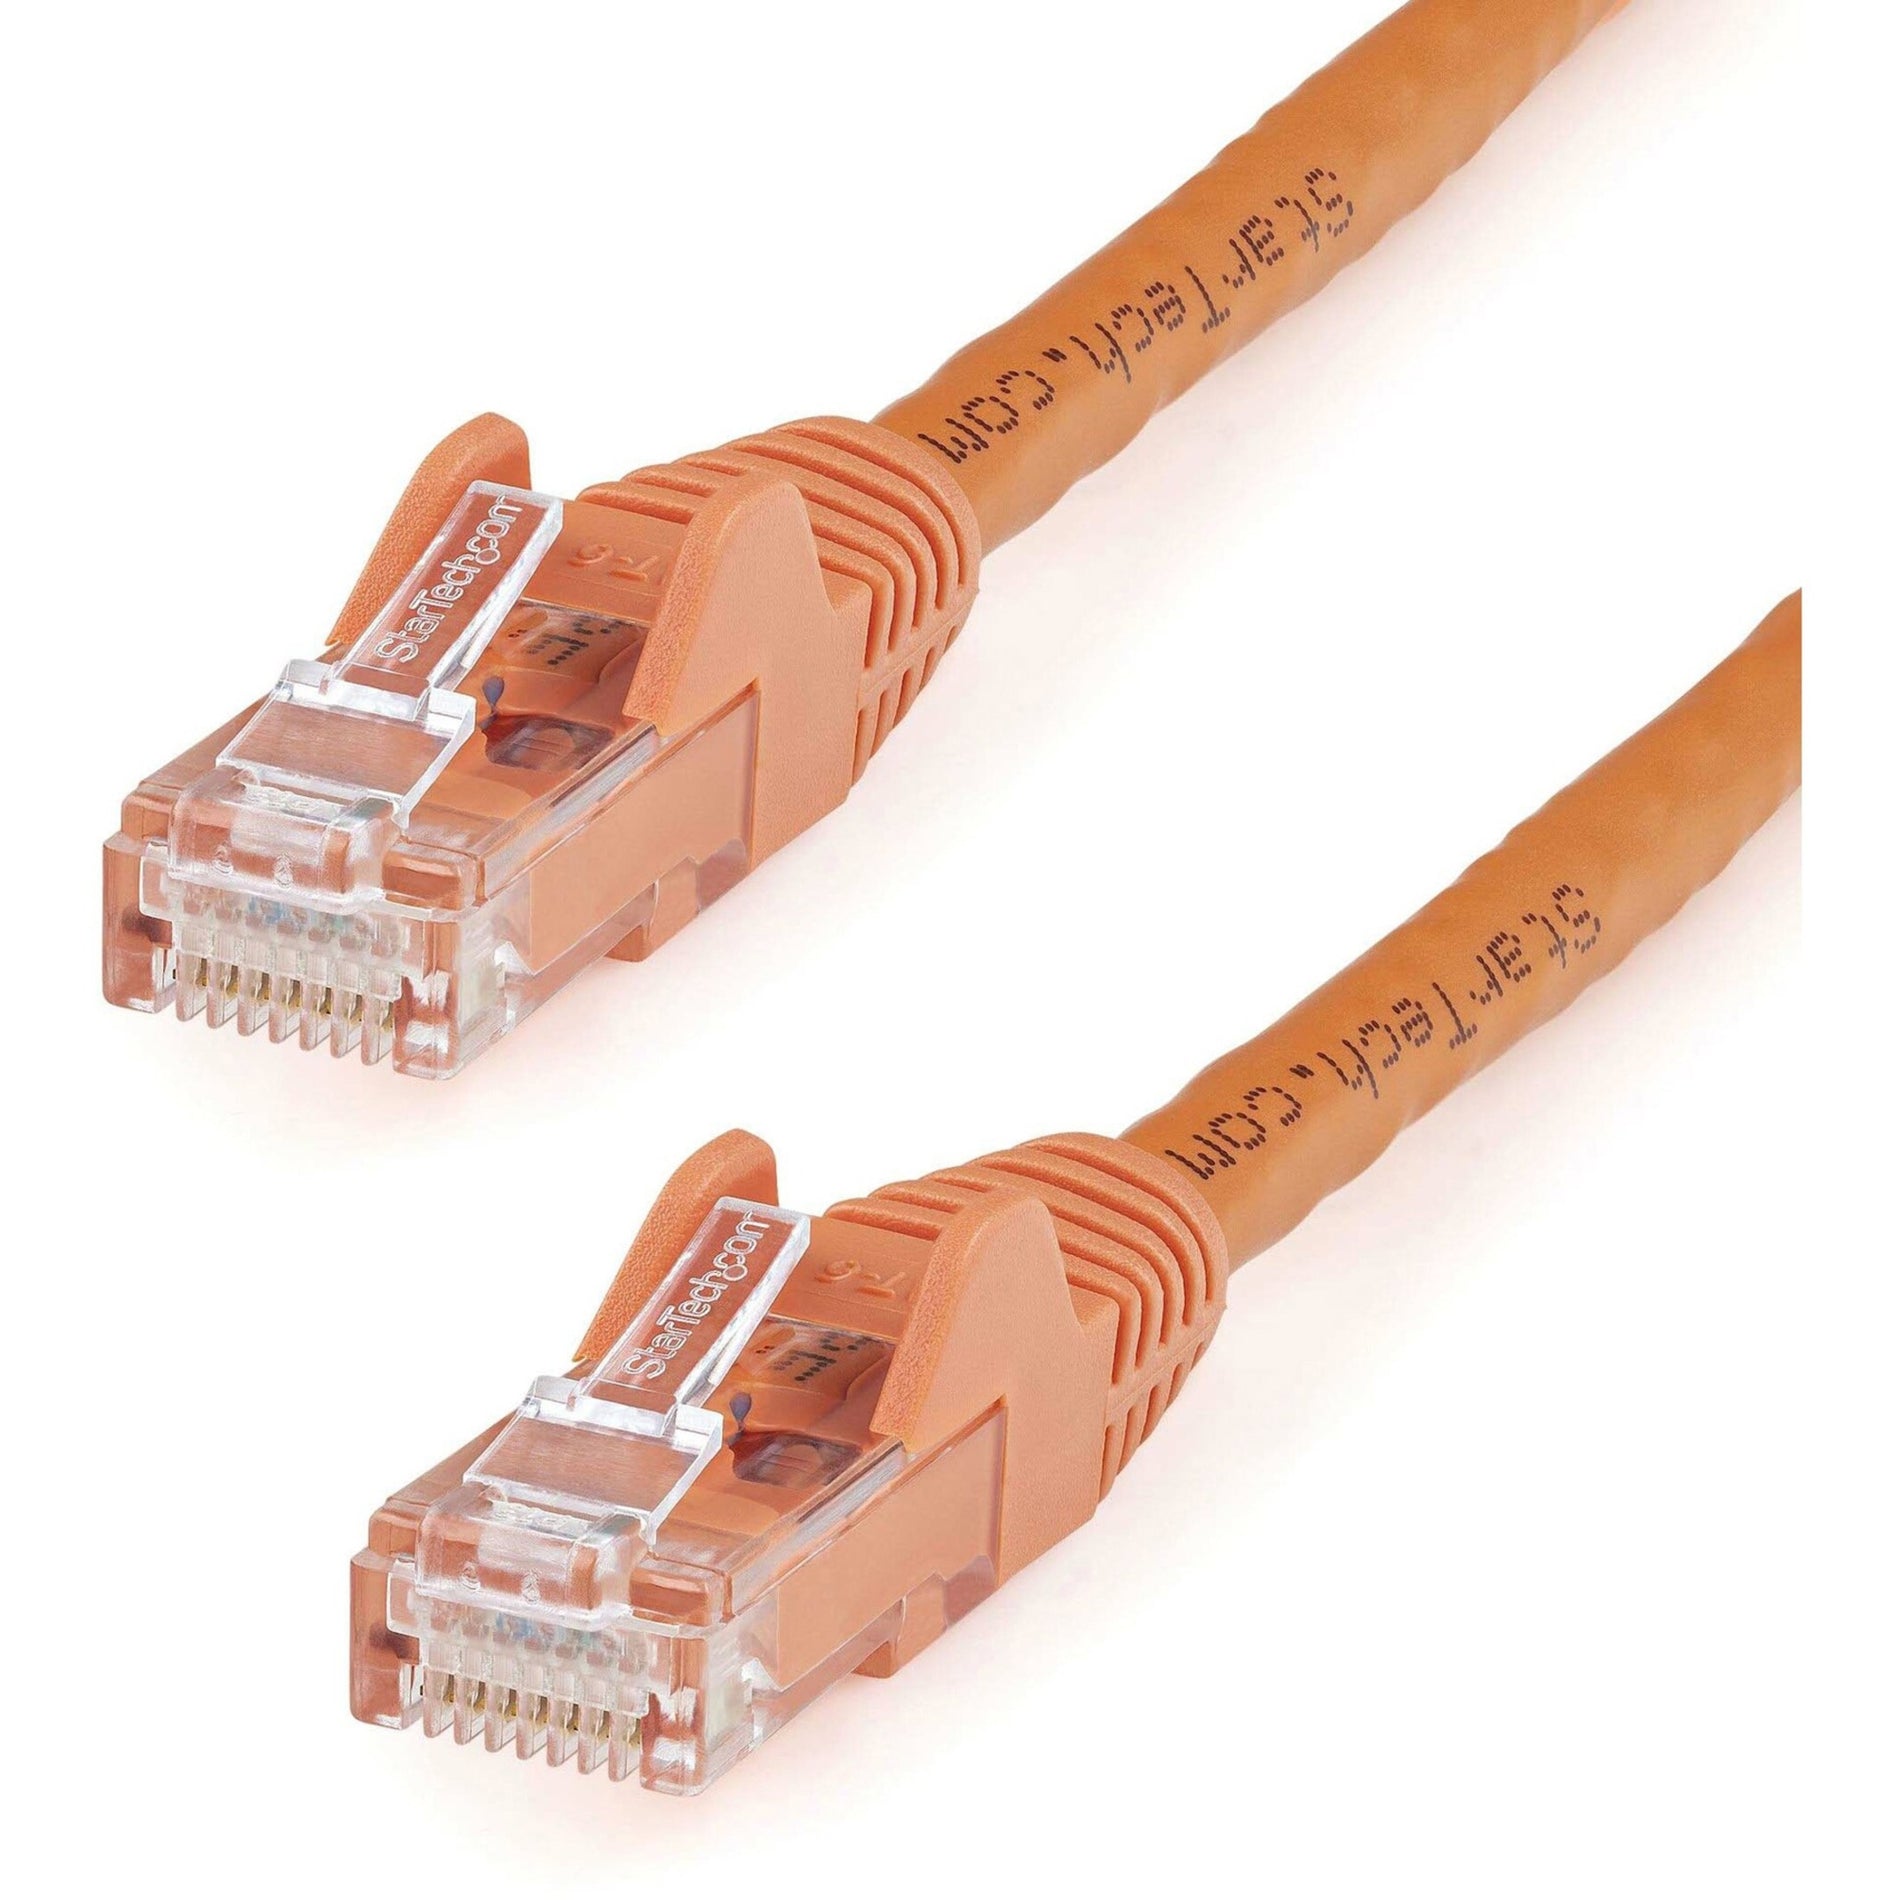 StarTech.com N6PATCH14OR Cat6 Patch Cable, 14ft Orange Ethernet Cable, Snagless RJ45 Connectors